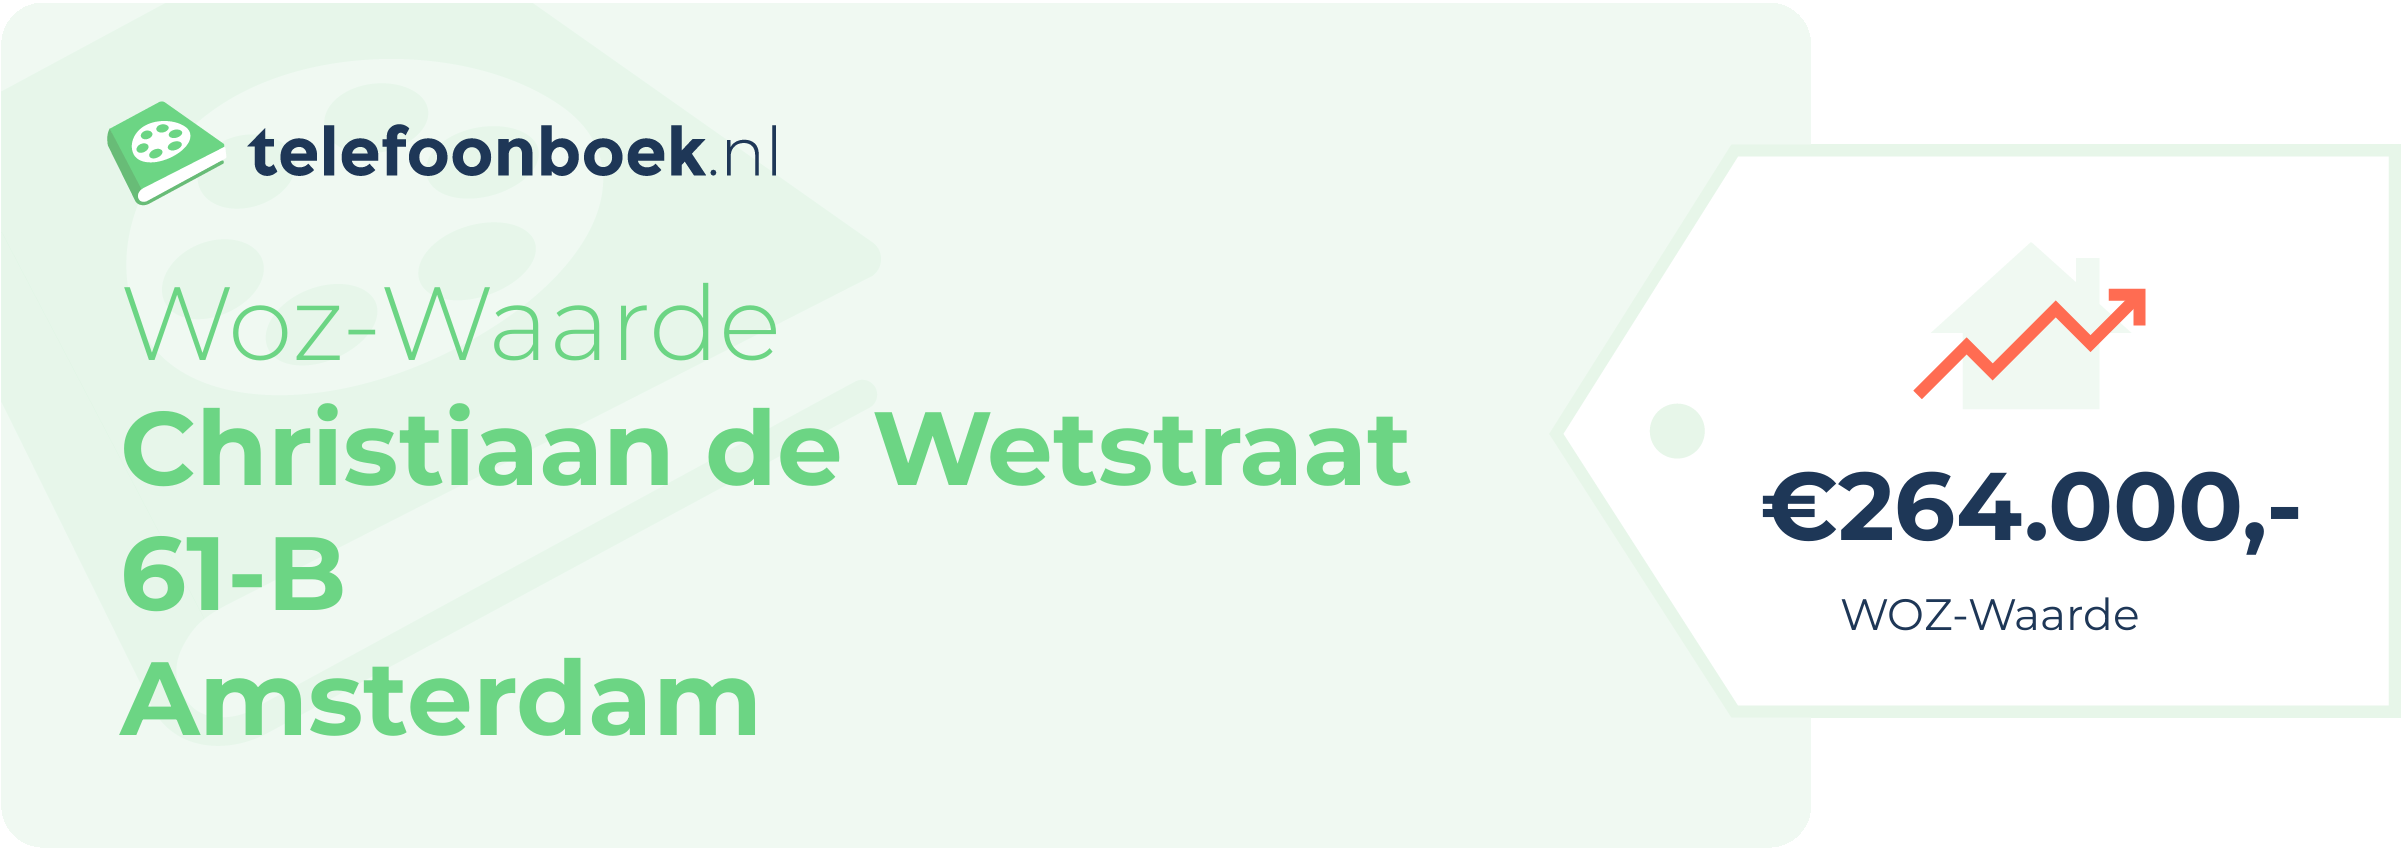 WOZ-waarde Christiaan De Wetstraat 61-B Amsterdam